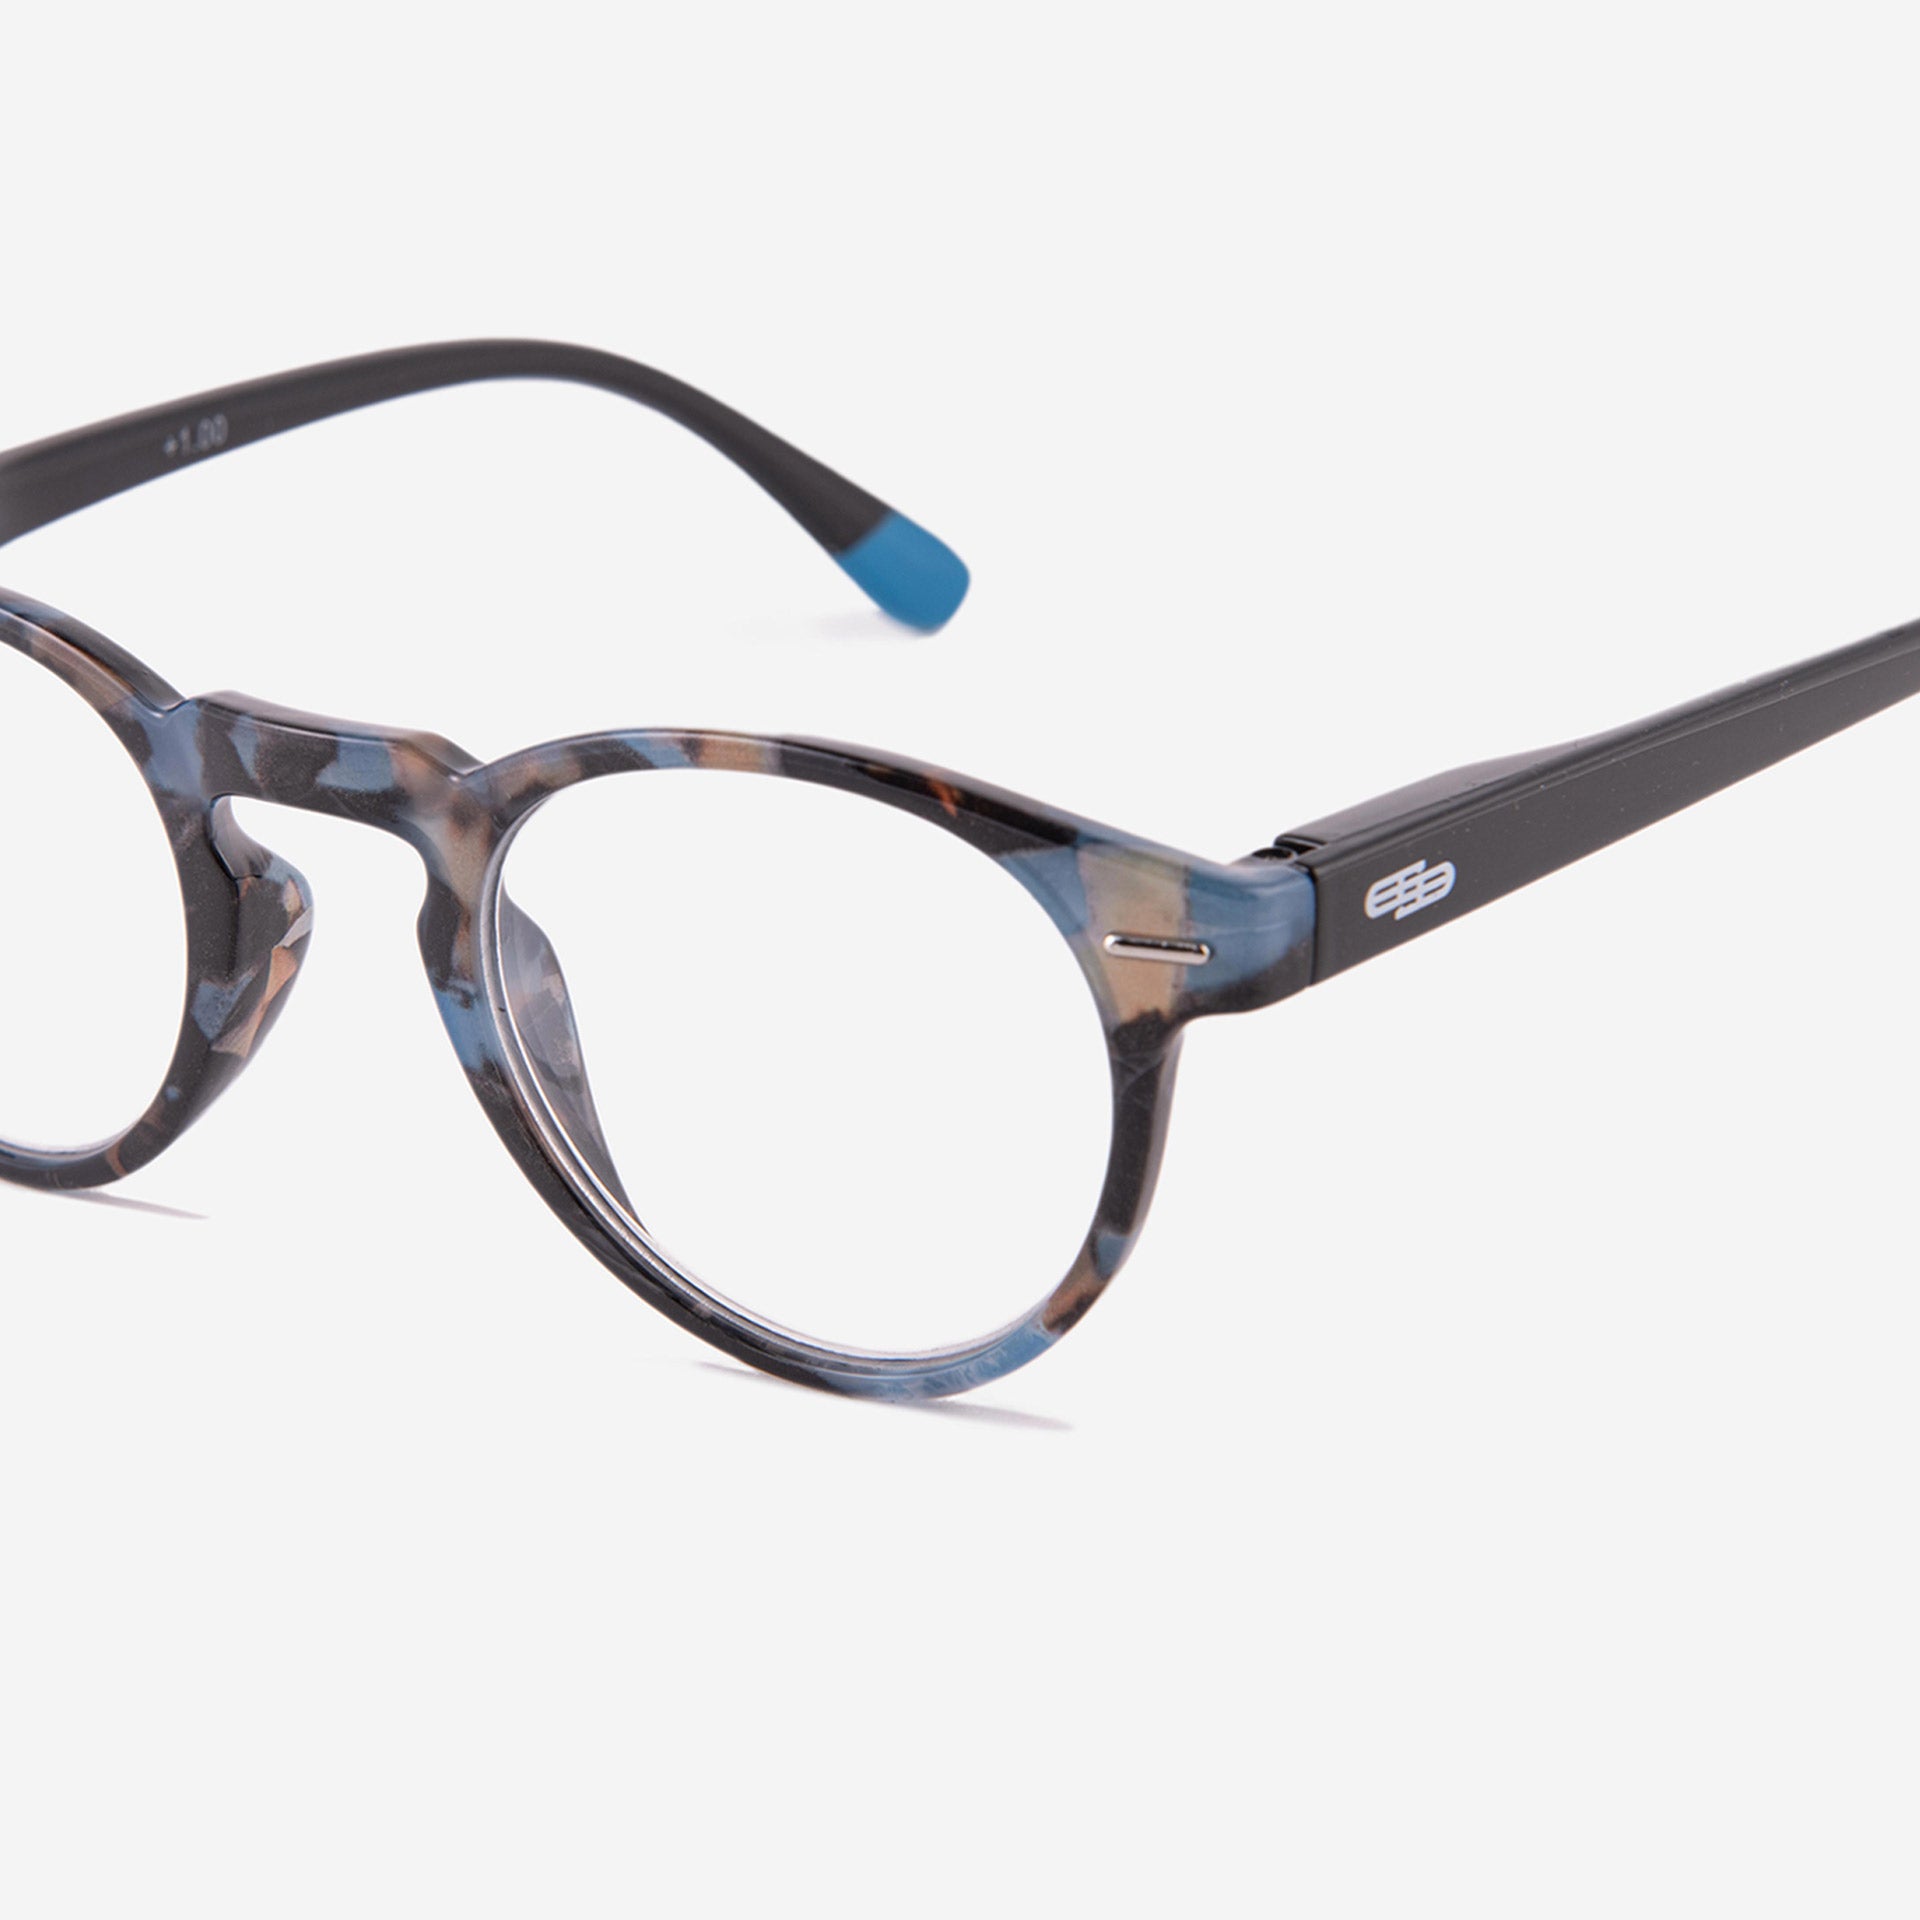 Pantos reading glasses - blue and black tortoiseshell pattern